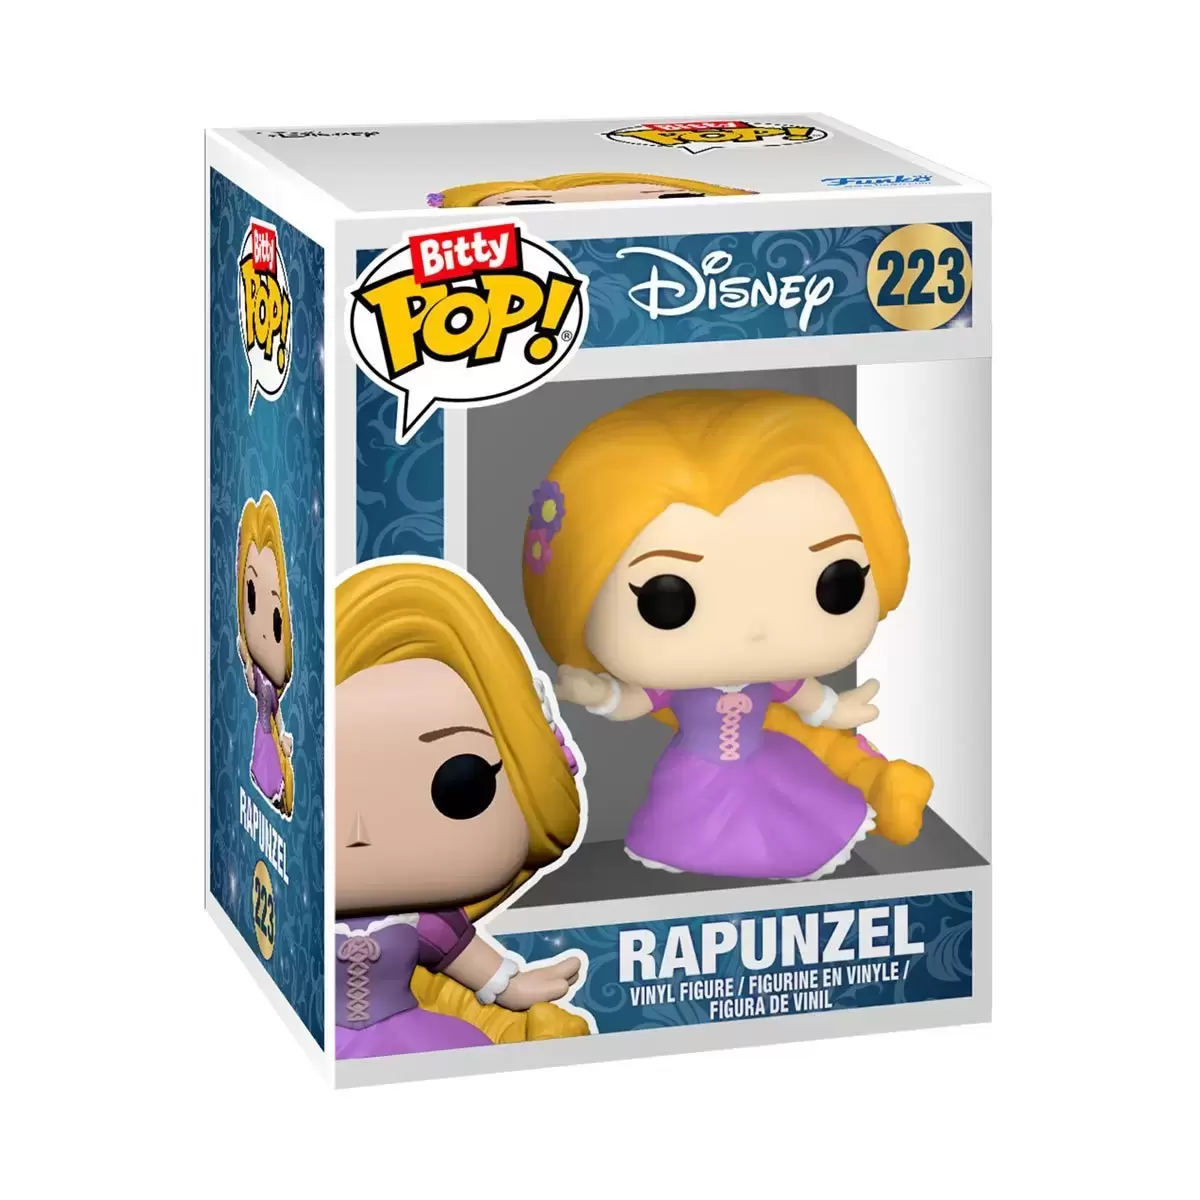 Bitty POP! - Disney Princess - Rapunzel